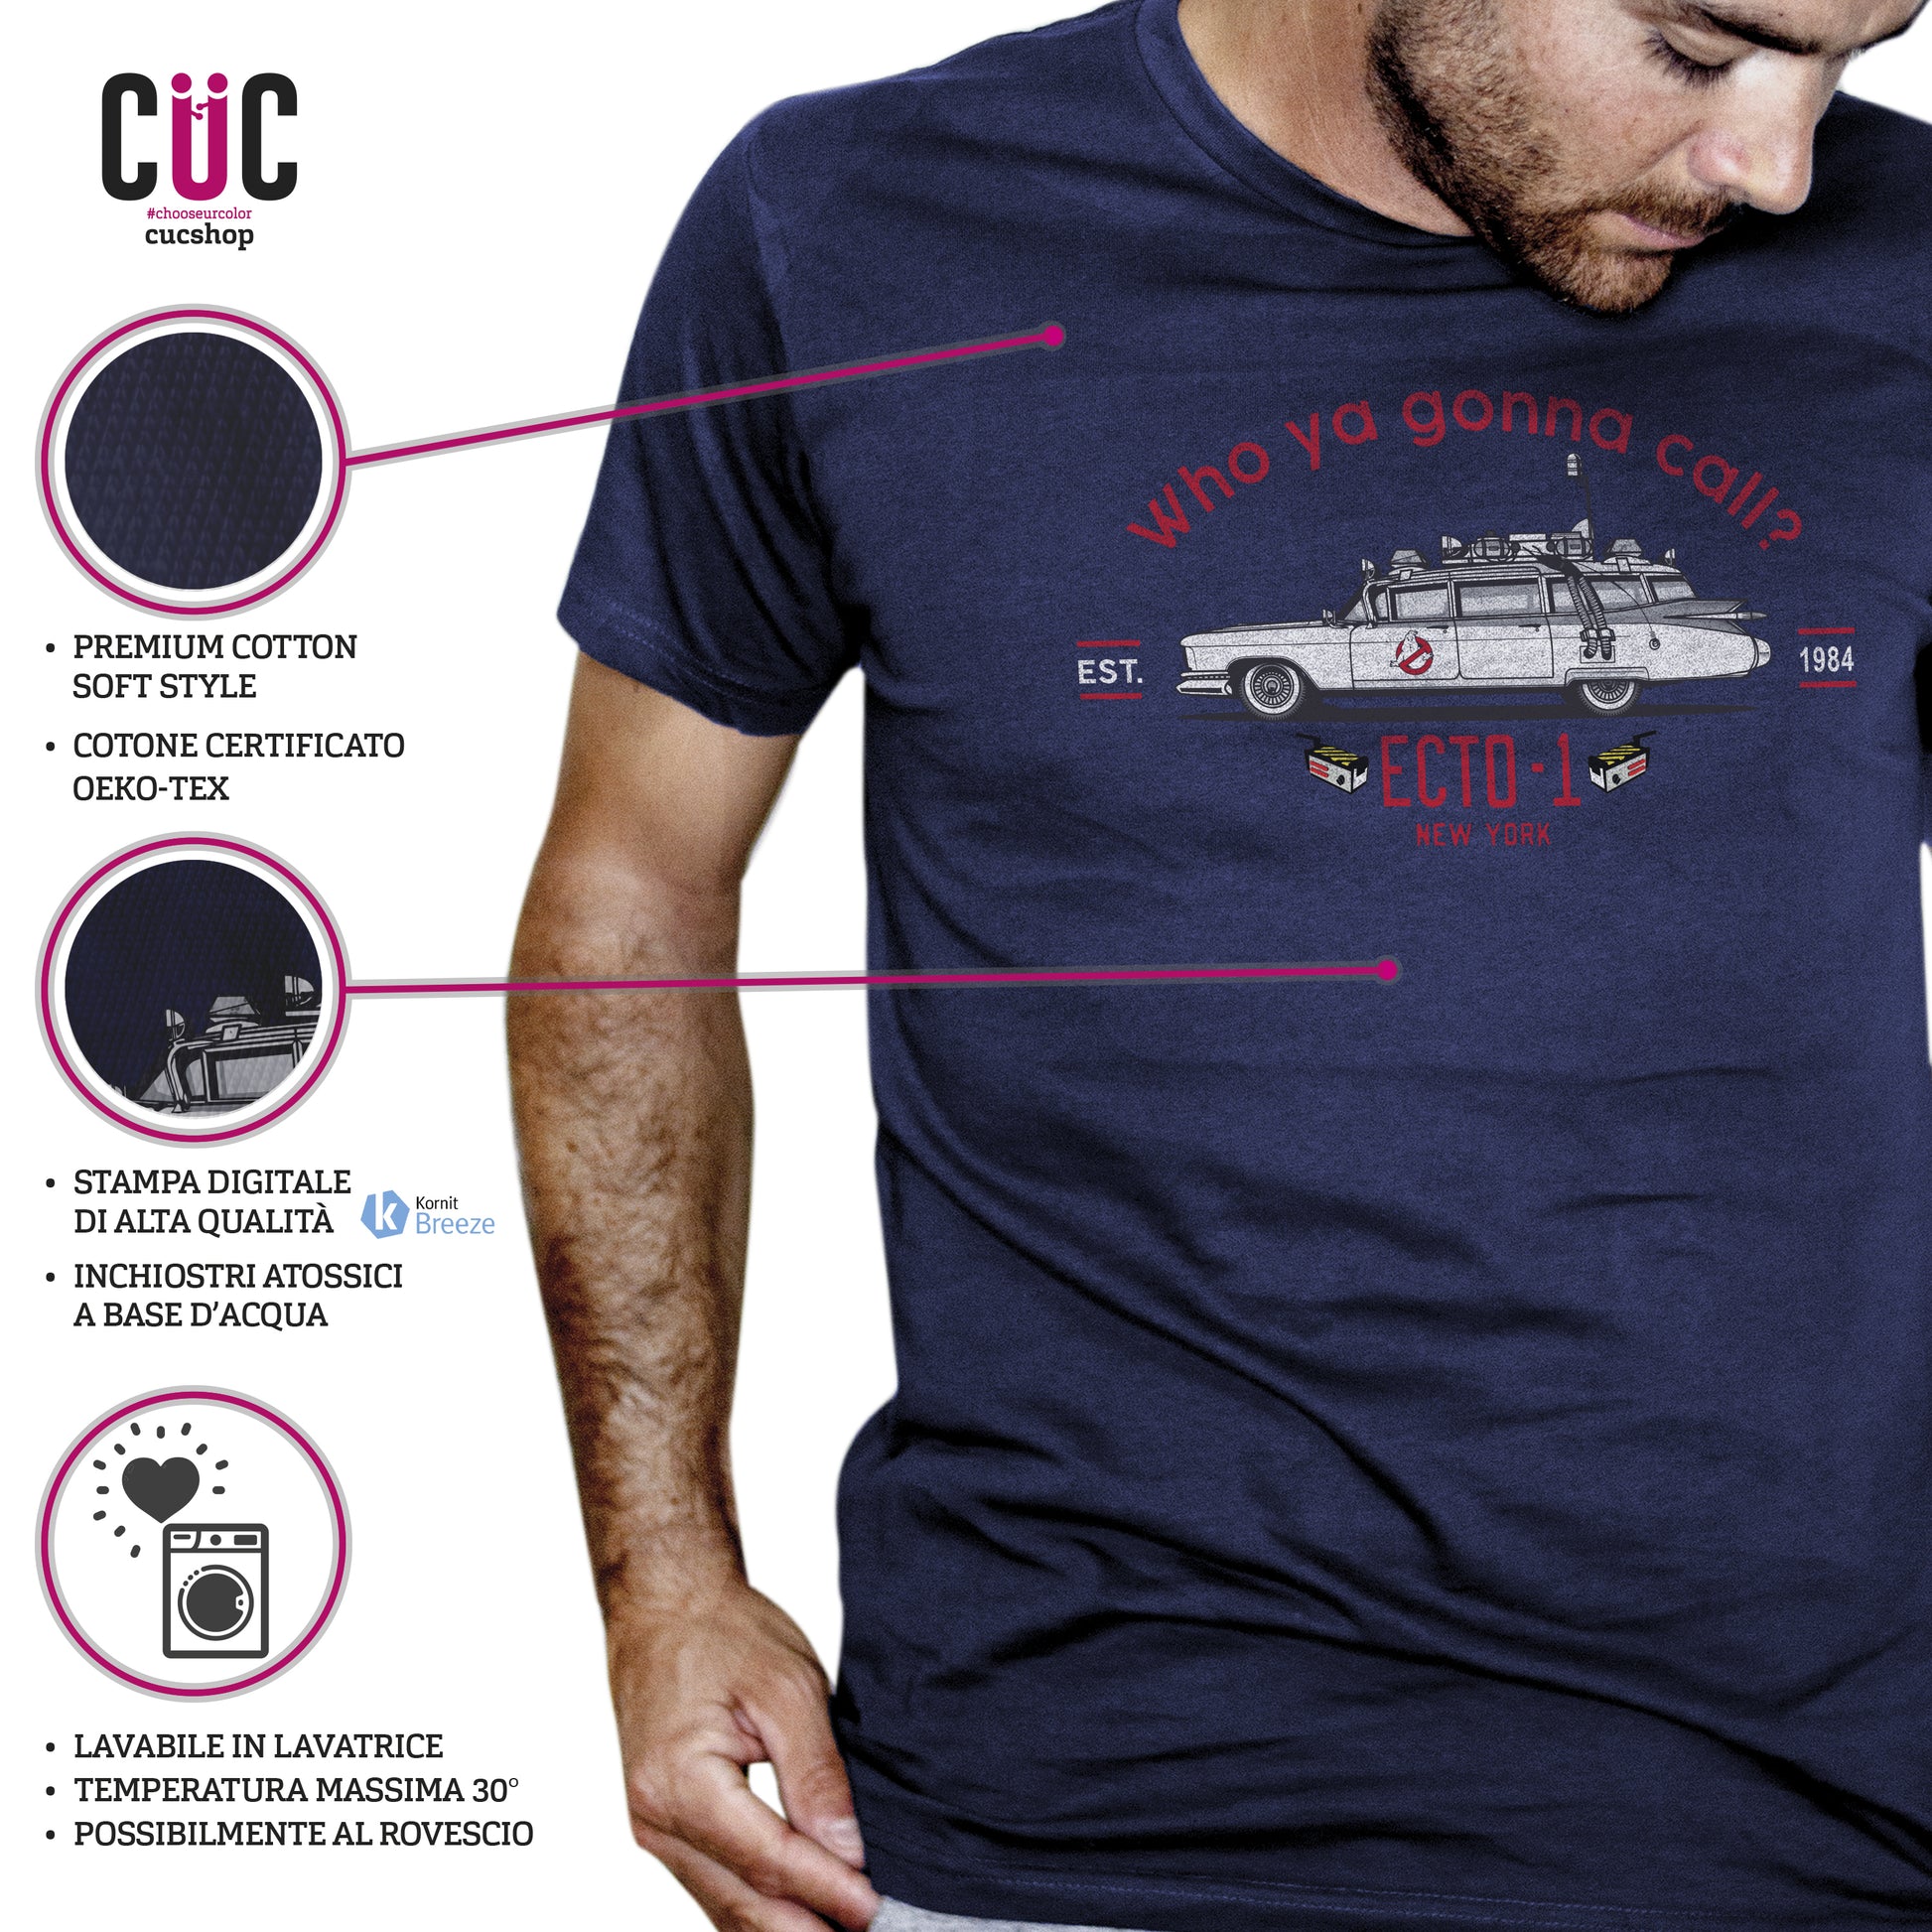 T-shirt Who ya gonna call? - Film cult anni 90 - Legacy - Ecto 1 - #chooseurcolor - CUC chooseurcolor